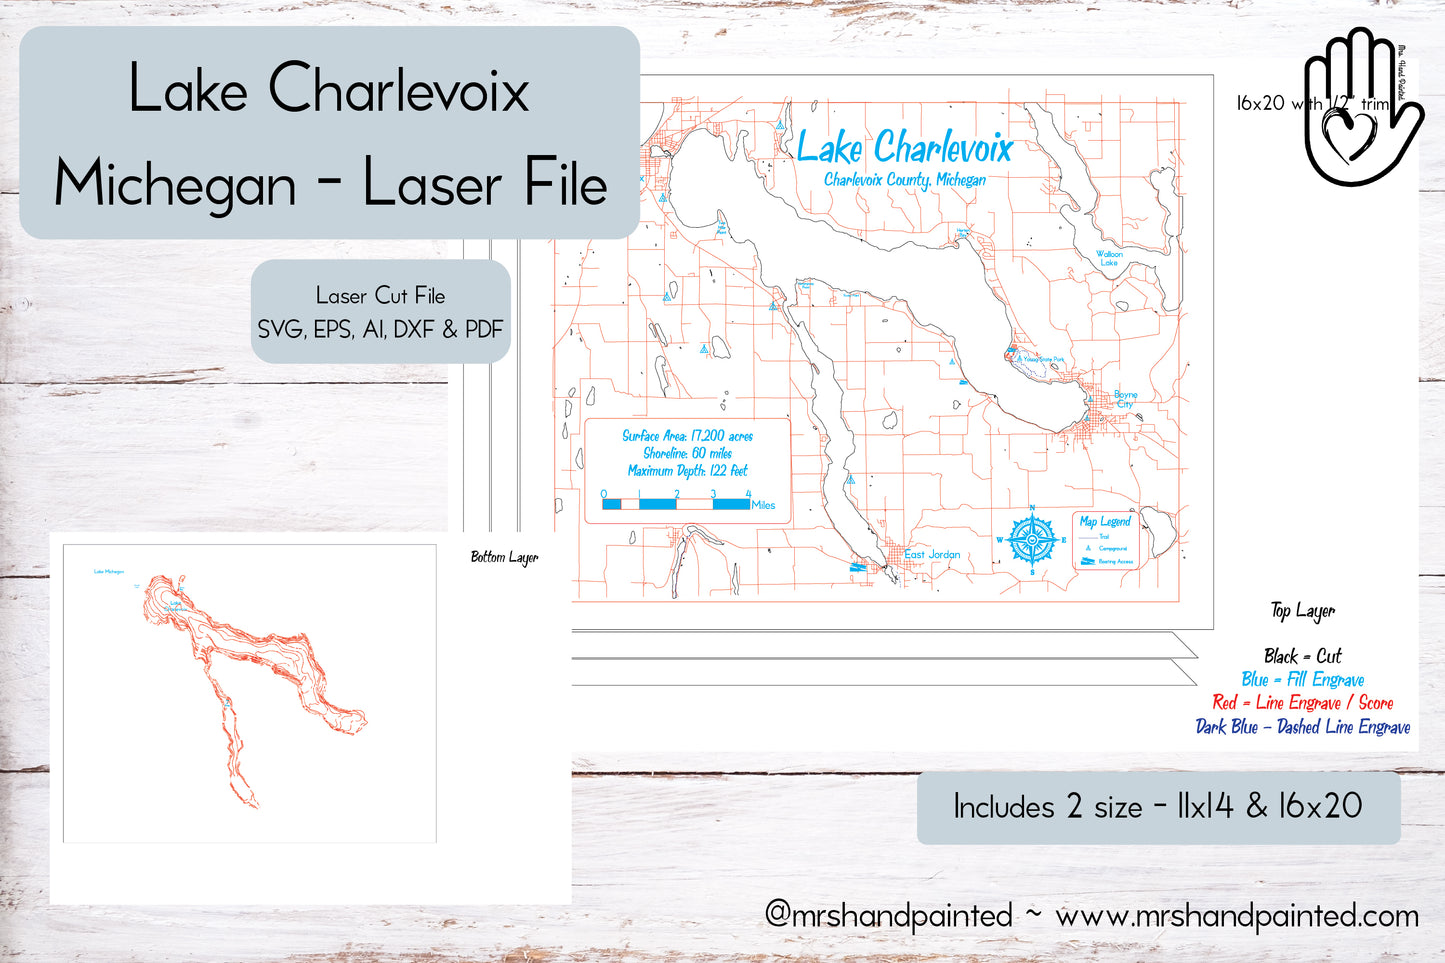 Lake Charlevoix - Michegan - Laser Engraved Map